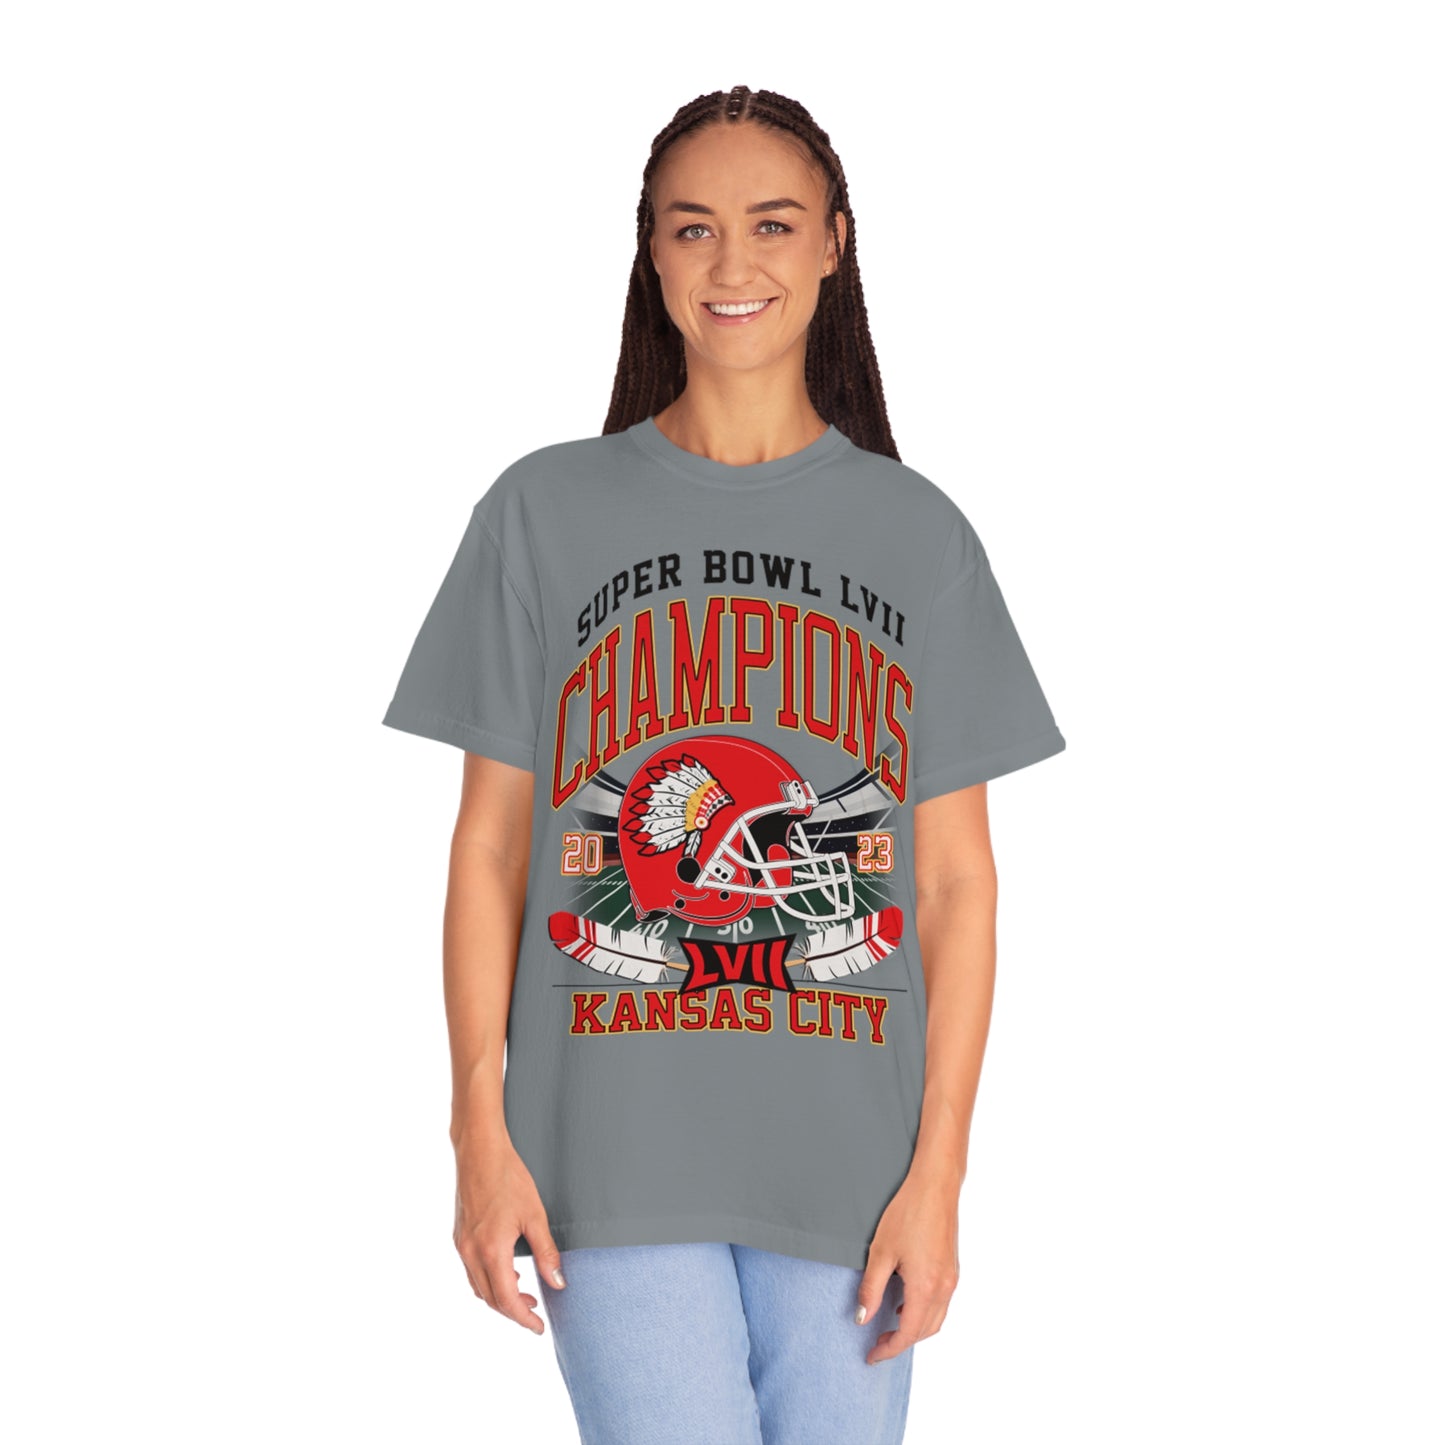 Kansas City Super Bowl Champions Football Unisex Garment-Dyed T-shirt